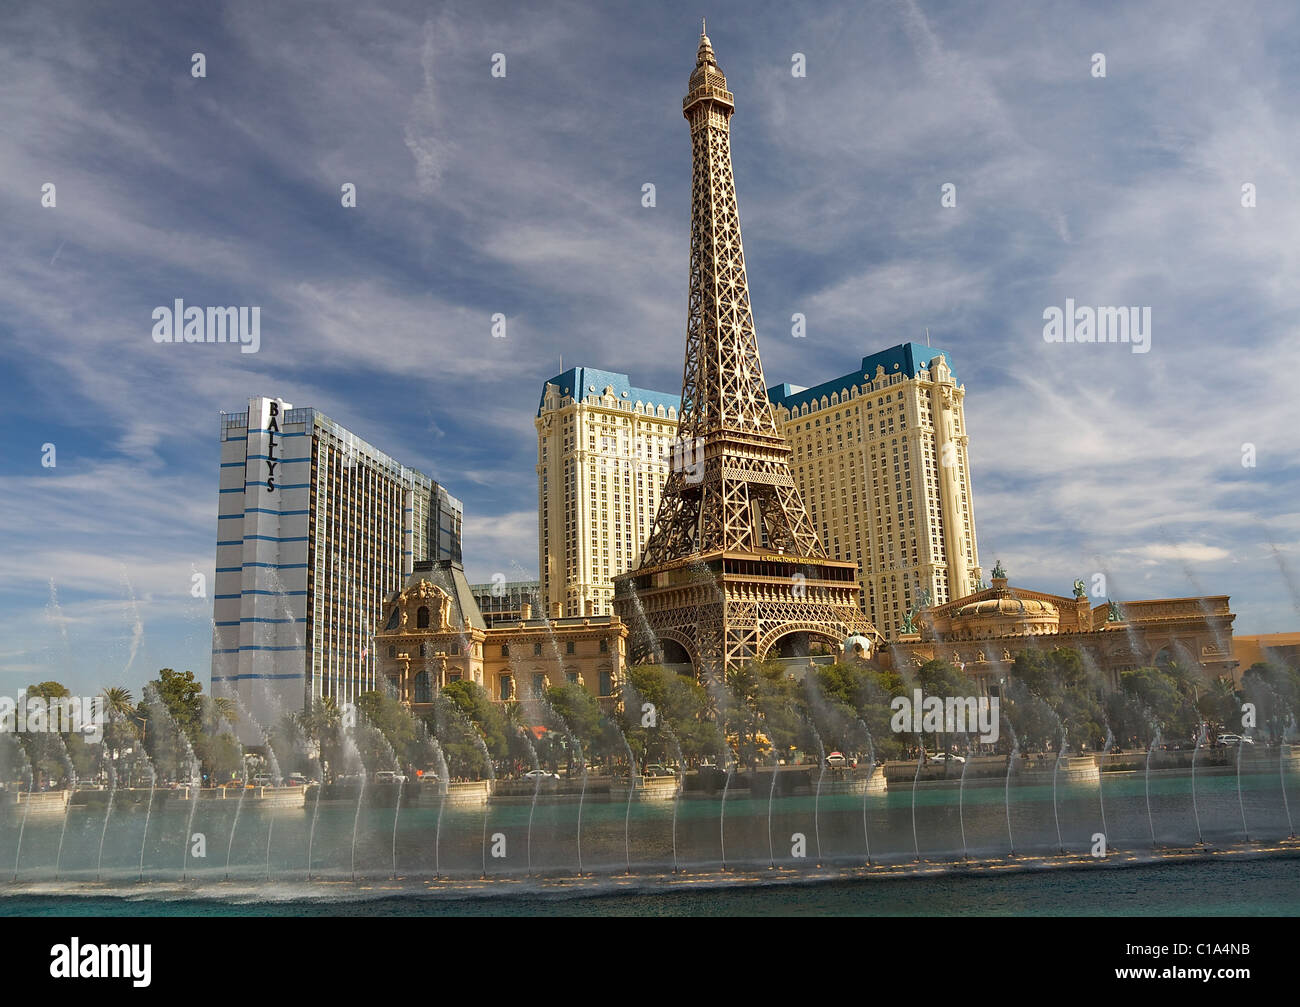 The Eiffel Tower of the Paris Las Vegas Hotel · Free Stock Photo